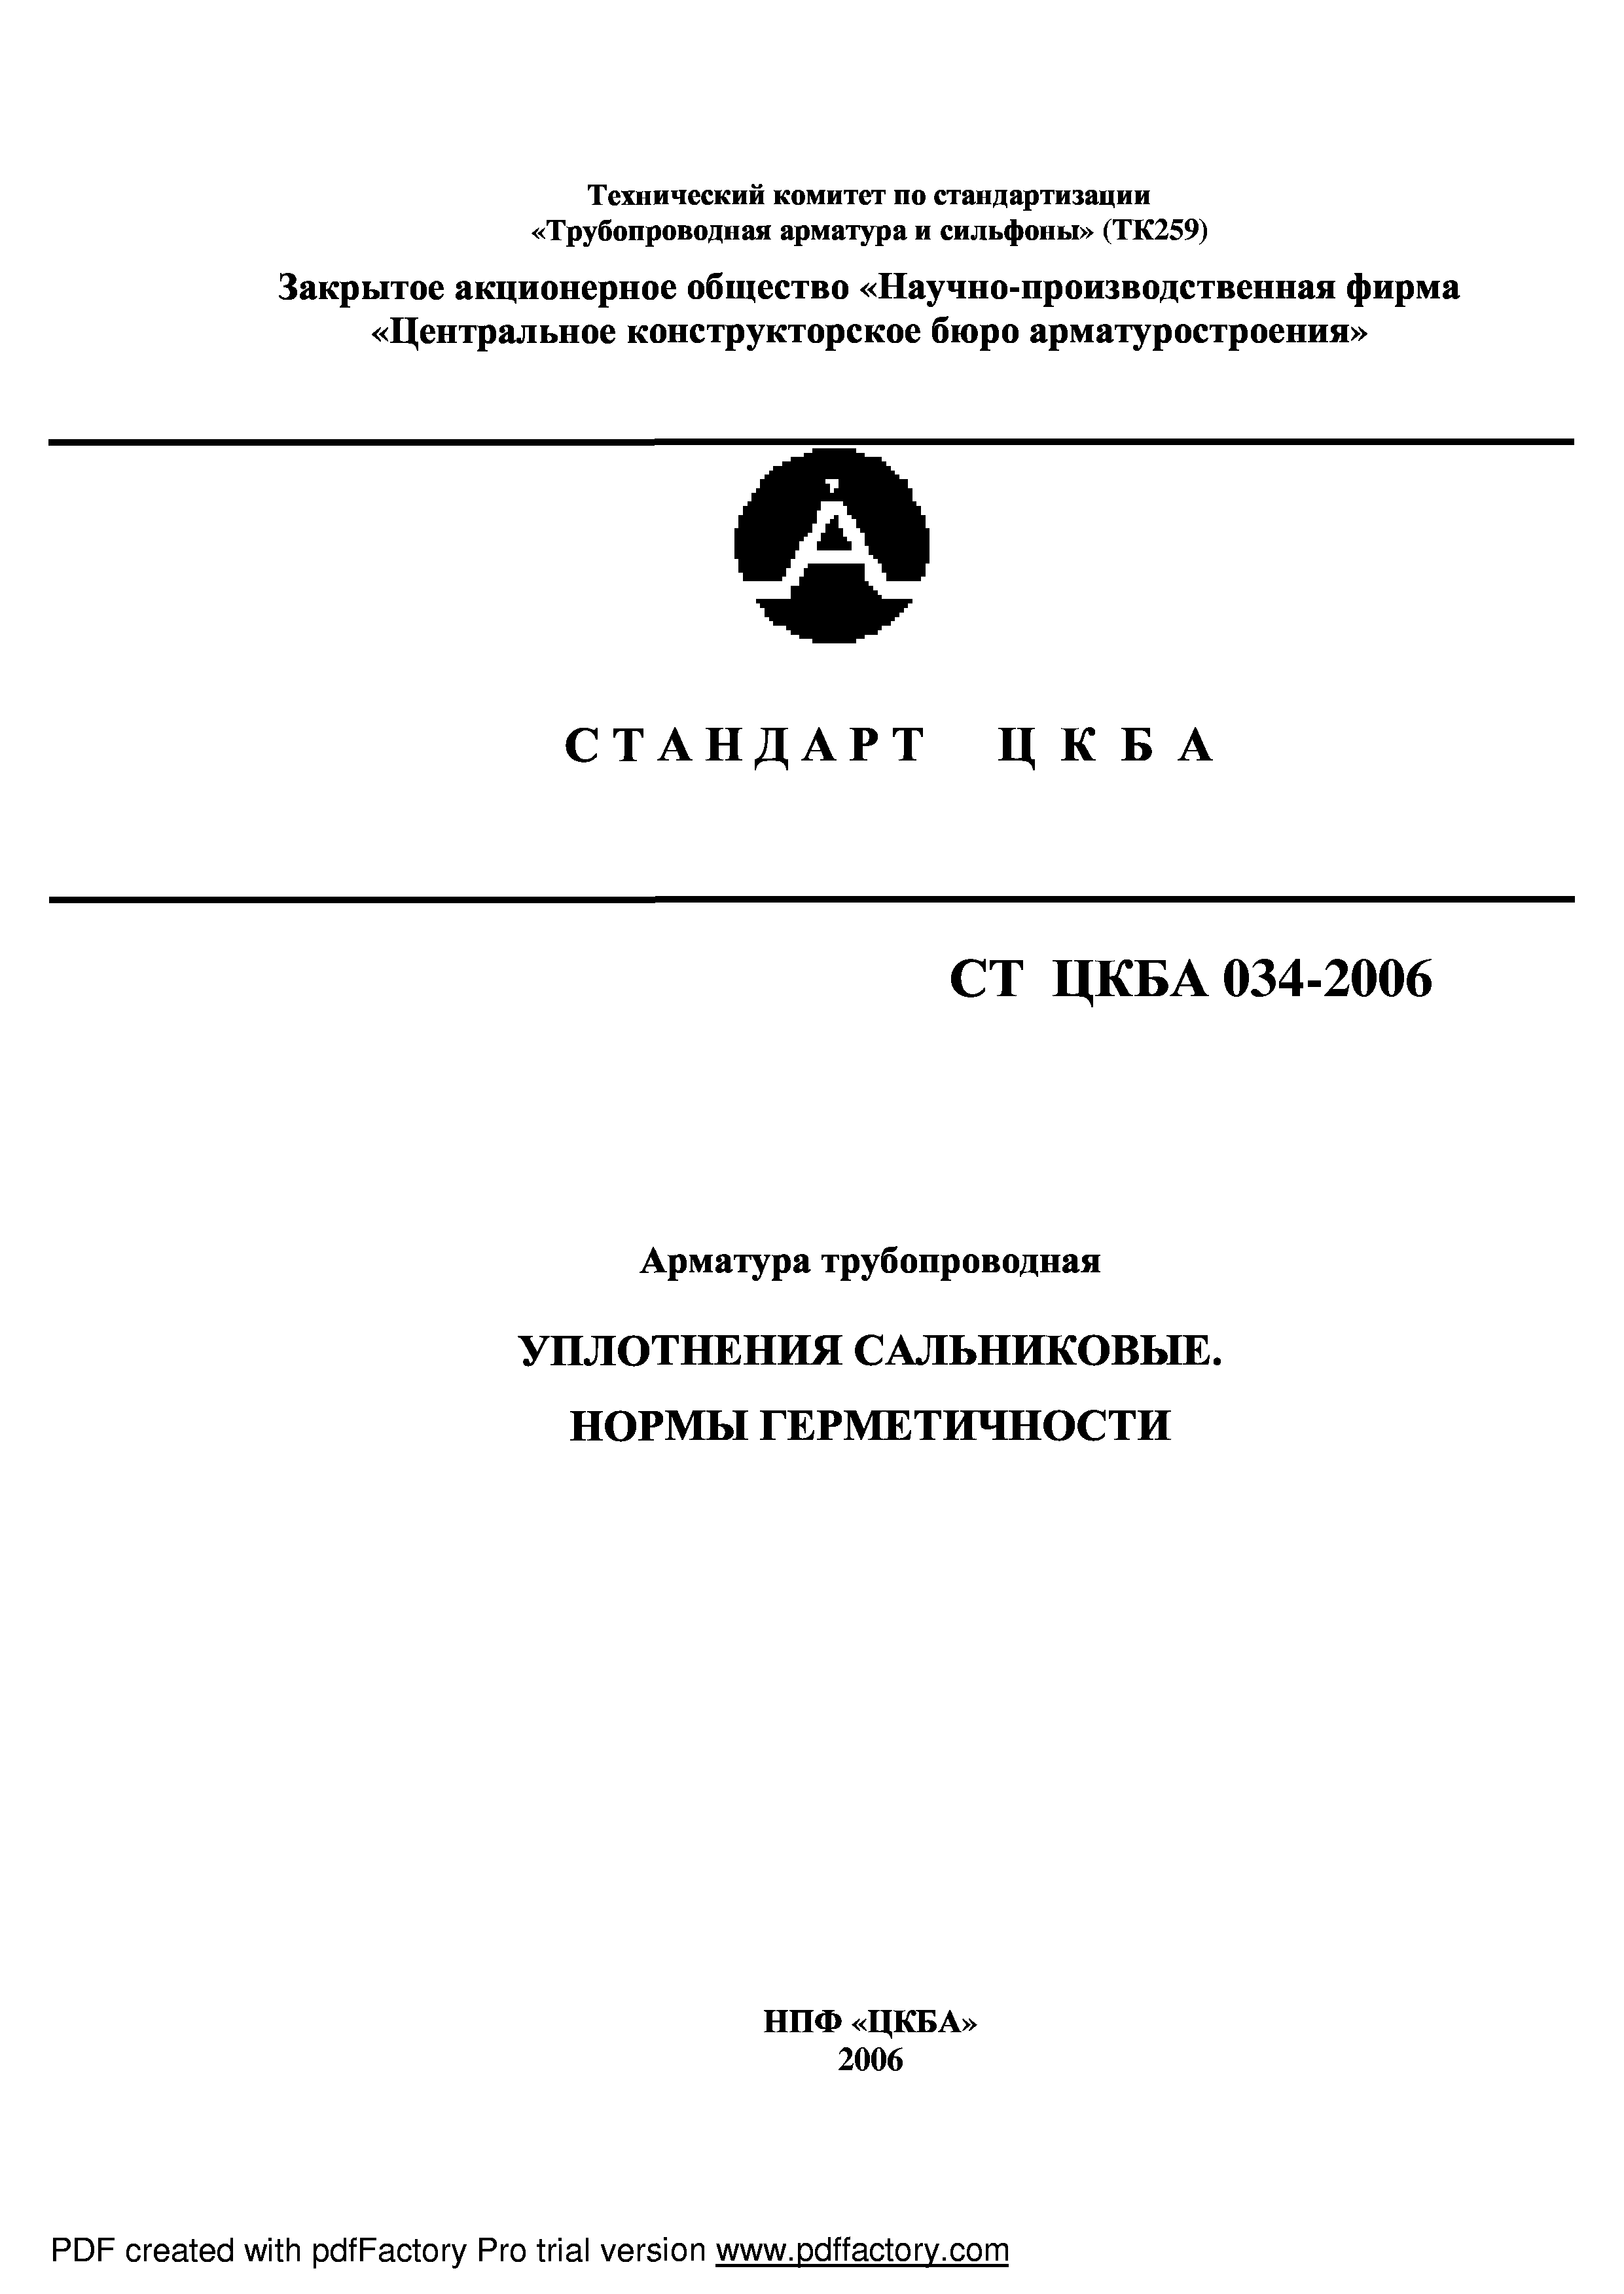 СТ ЦКБА 034-2006